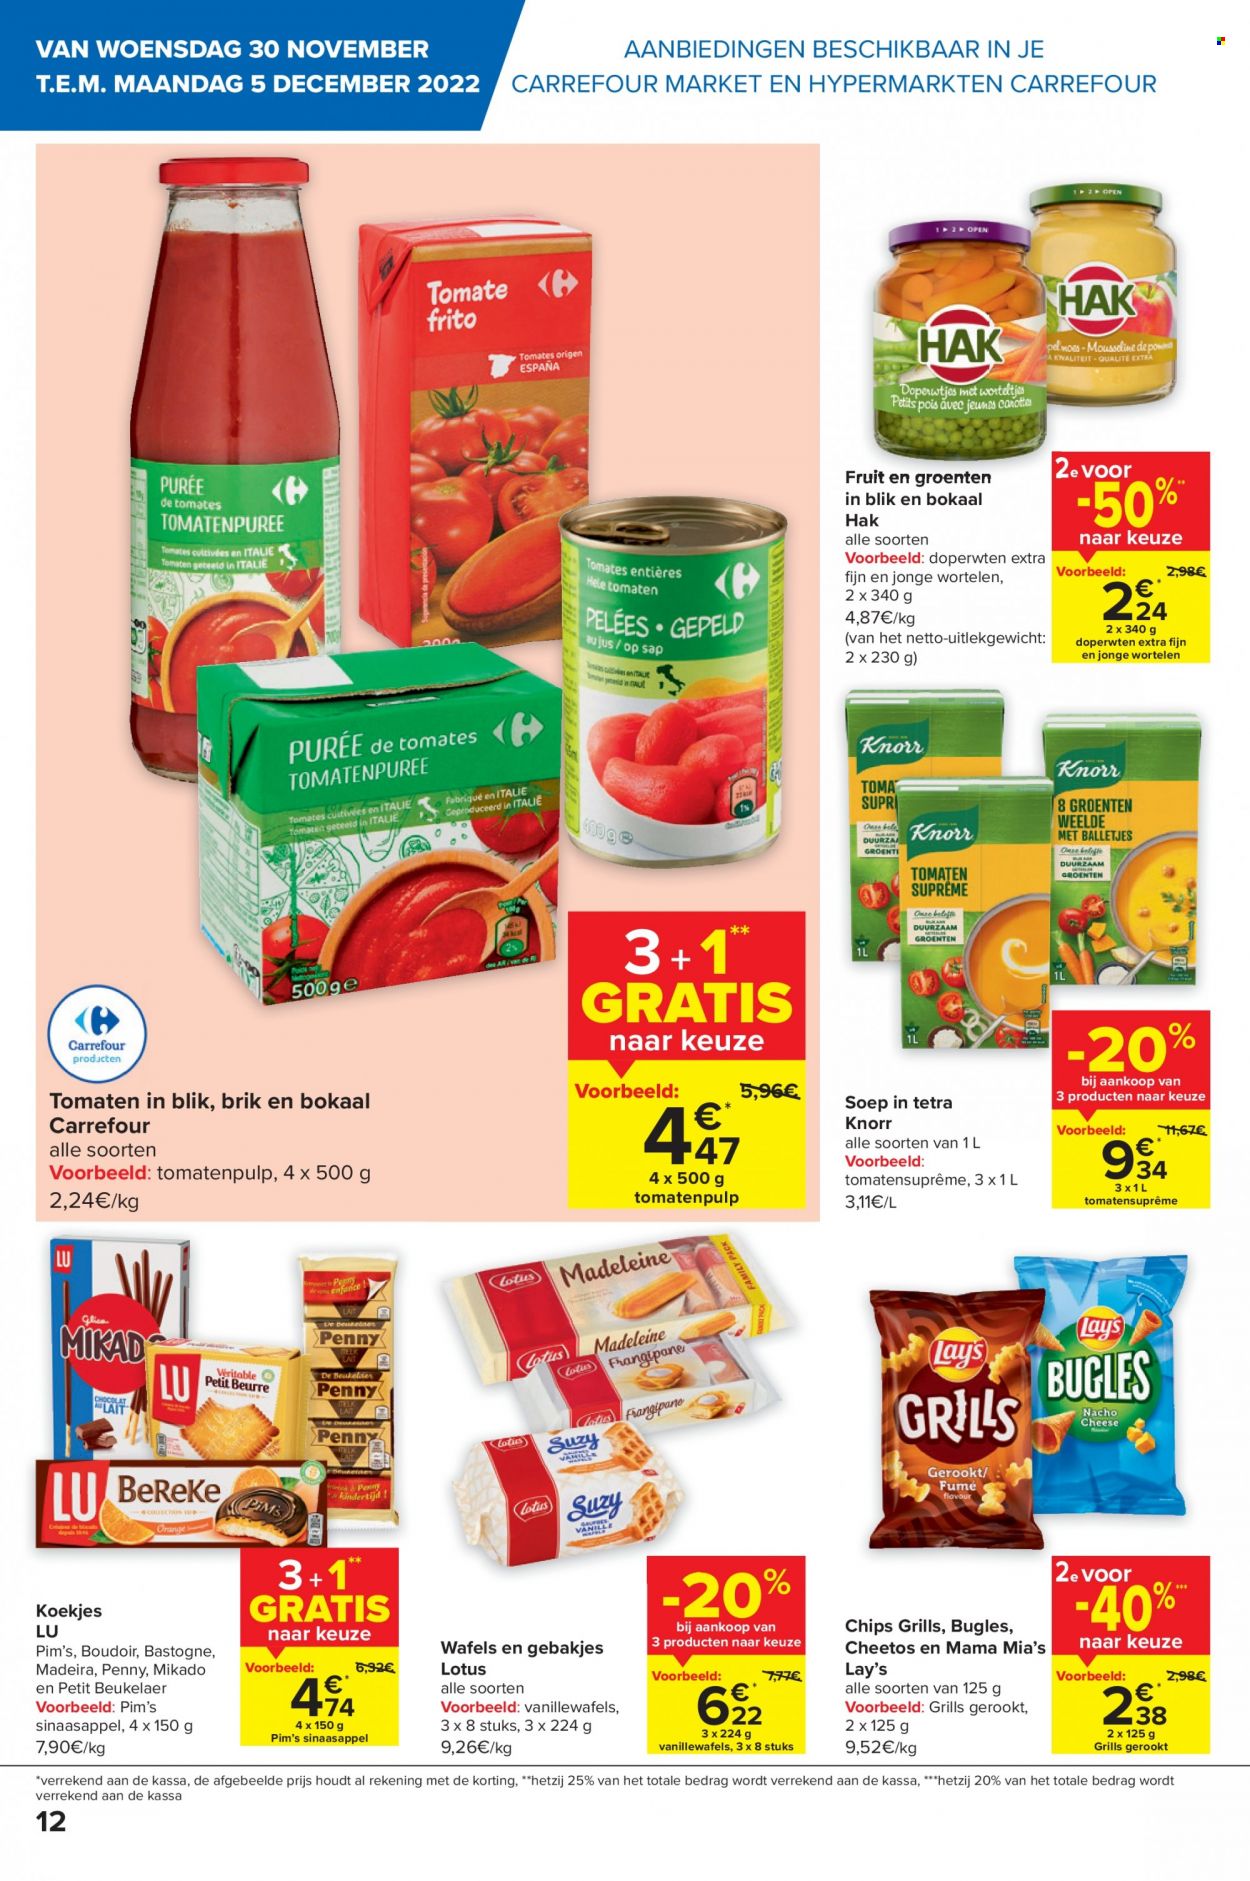 thumbnail - Catalogue Carrefour - 30/11/2022 - 05/12/2022 - Produits soldés - Knorr, Lotus, Mikado, LU, chips, Lay’s. Page 12.